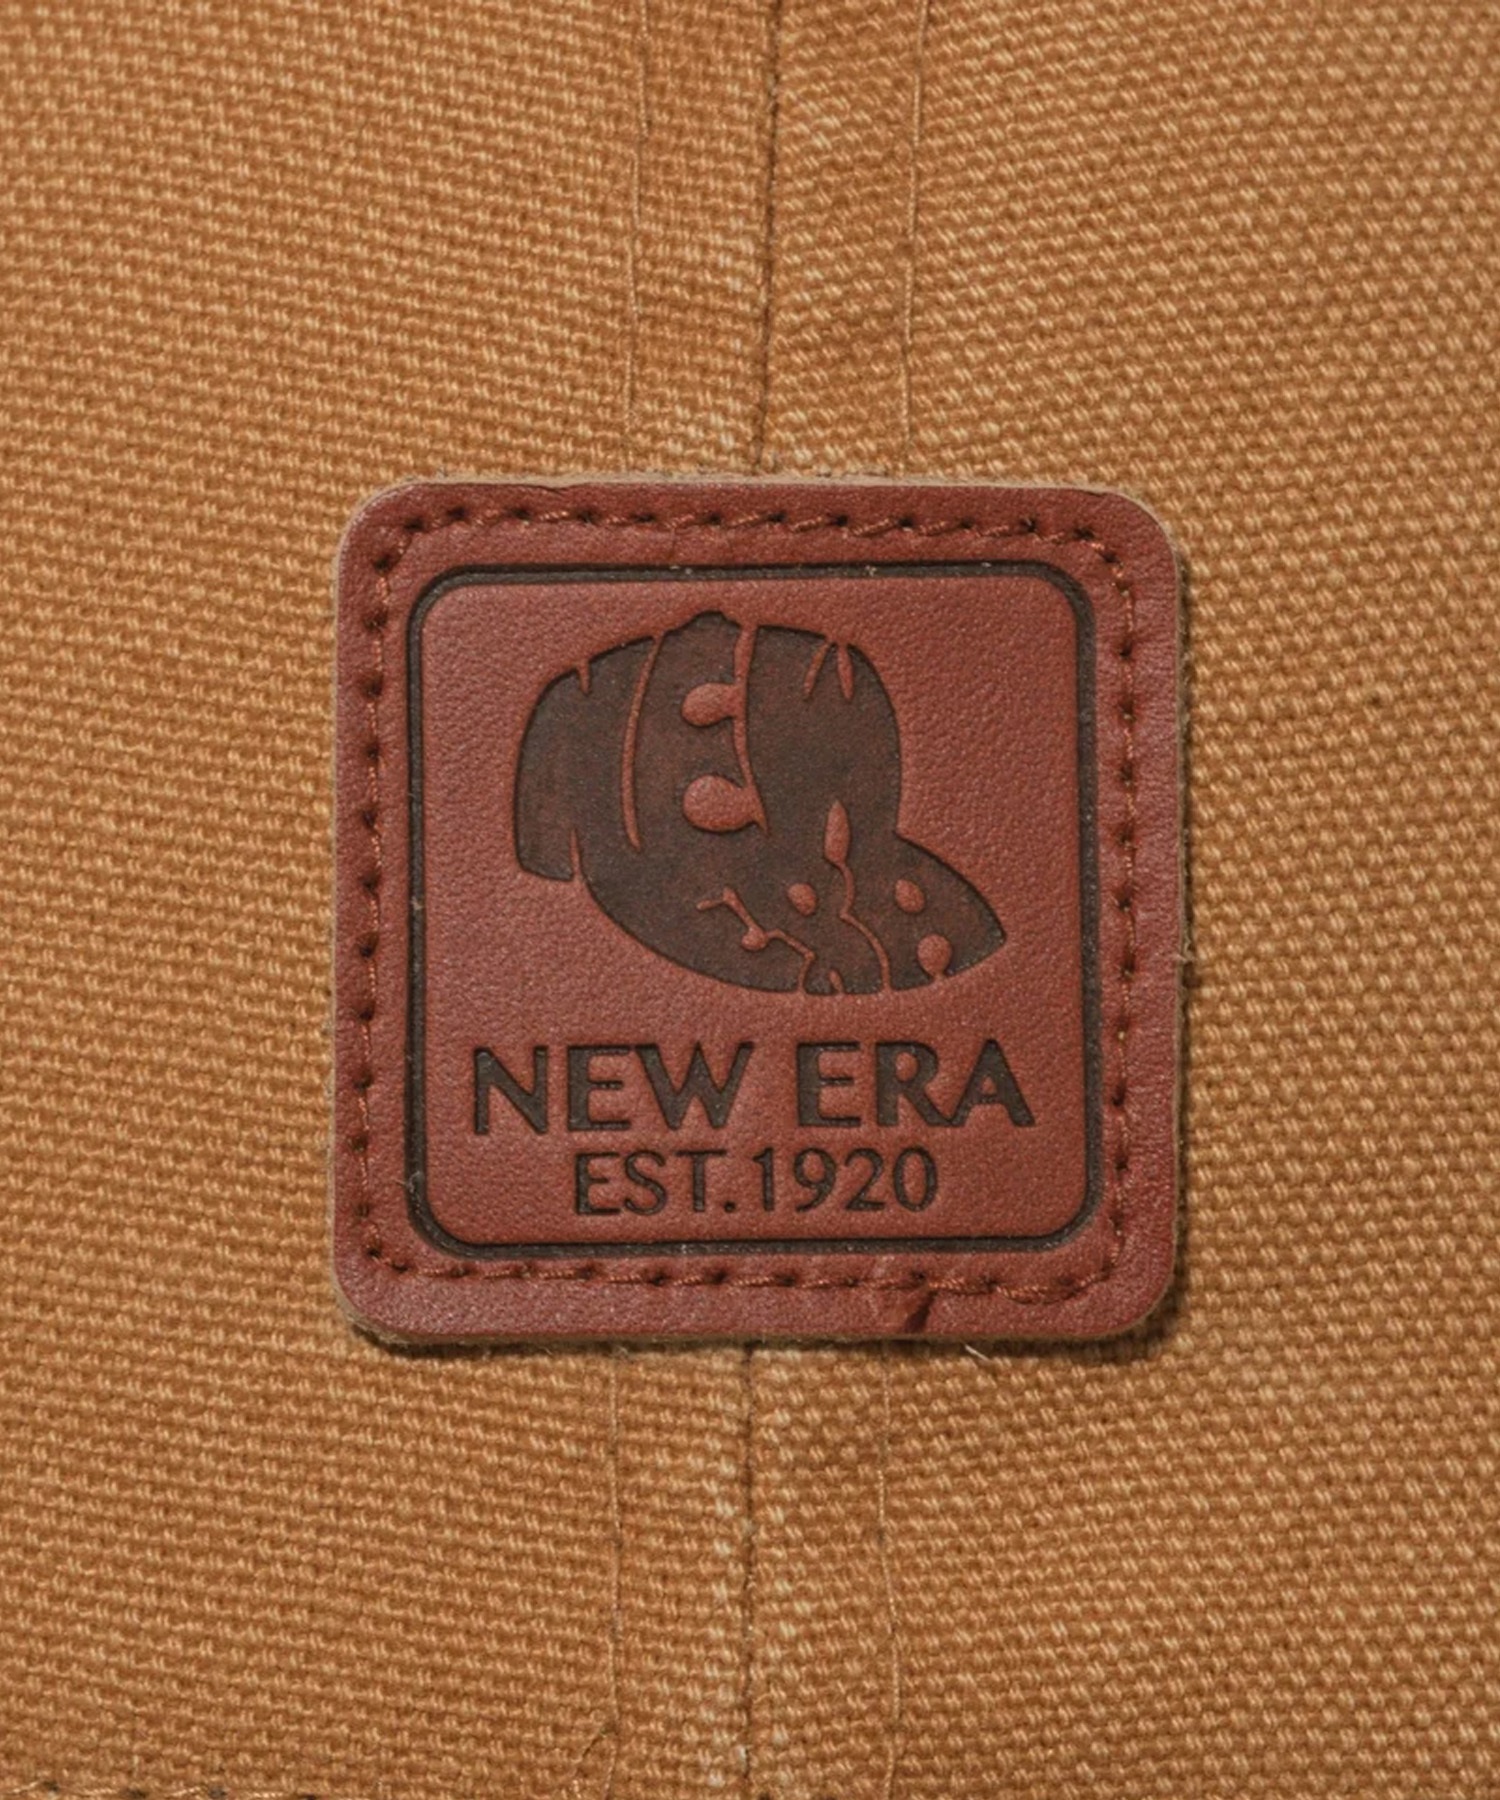 NEW ERA ニューエラ Youth 9TWENTY Leather Patch ダックキャンバス ライトブロンズ キッズ キャップ 帽子 14111929(ONECOLOR-YTH)